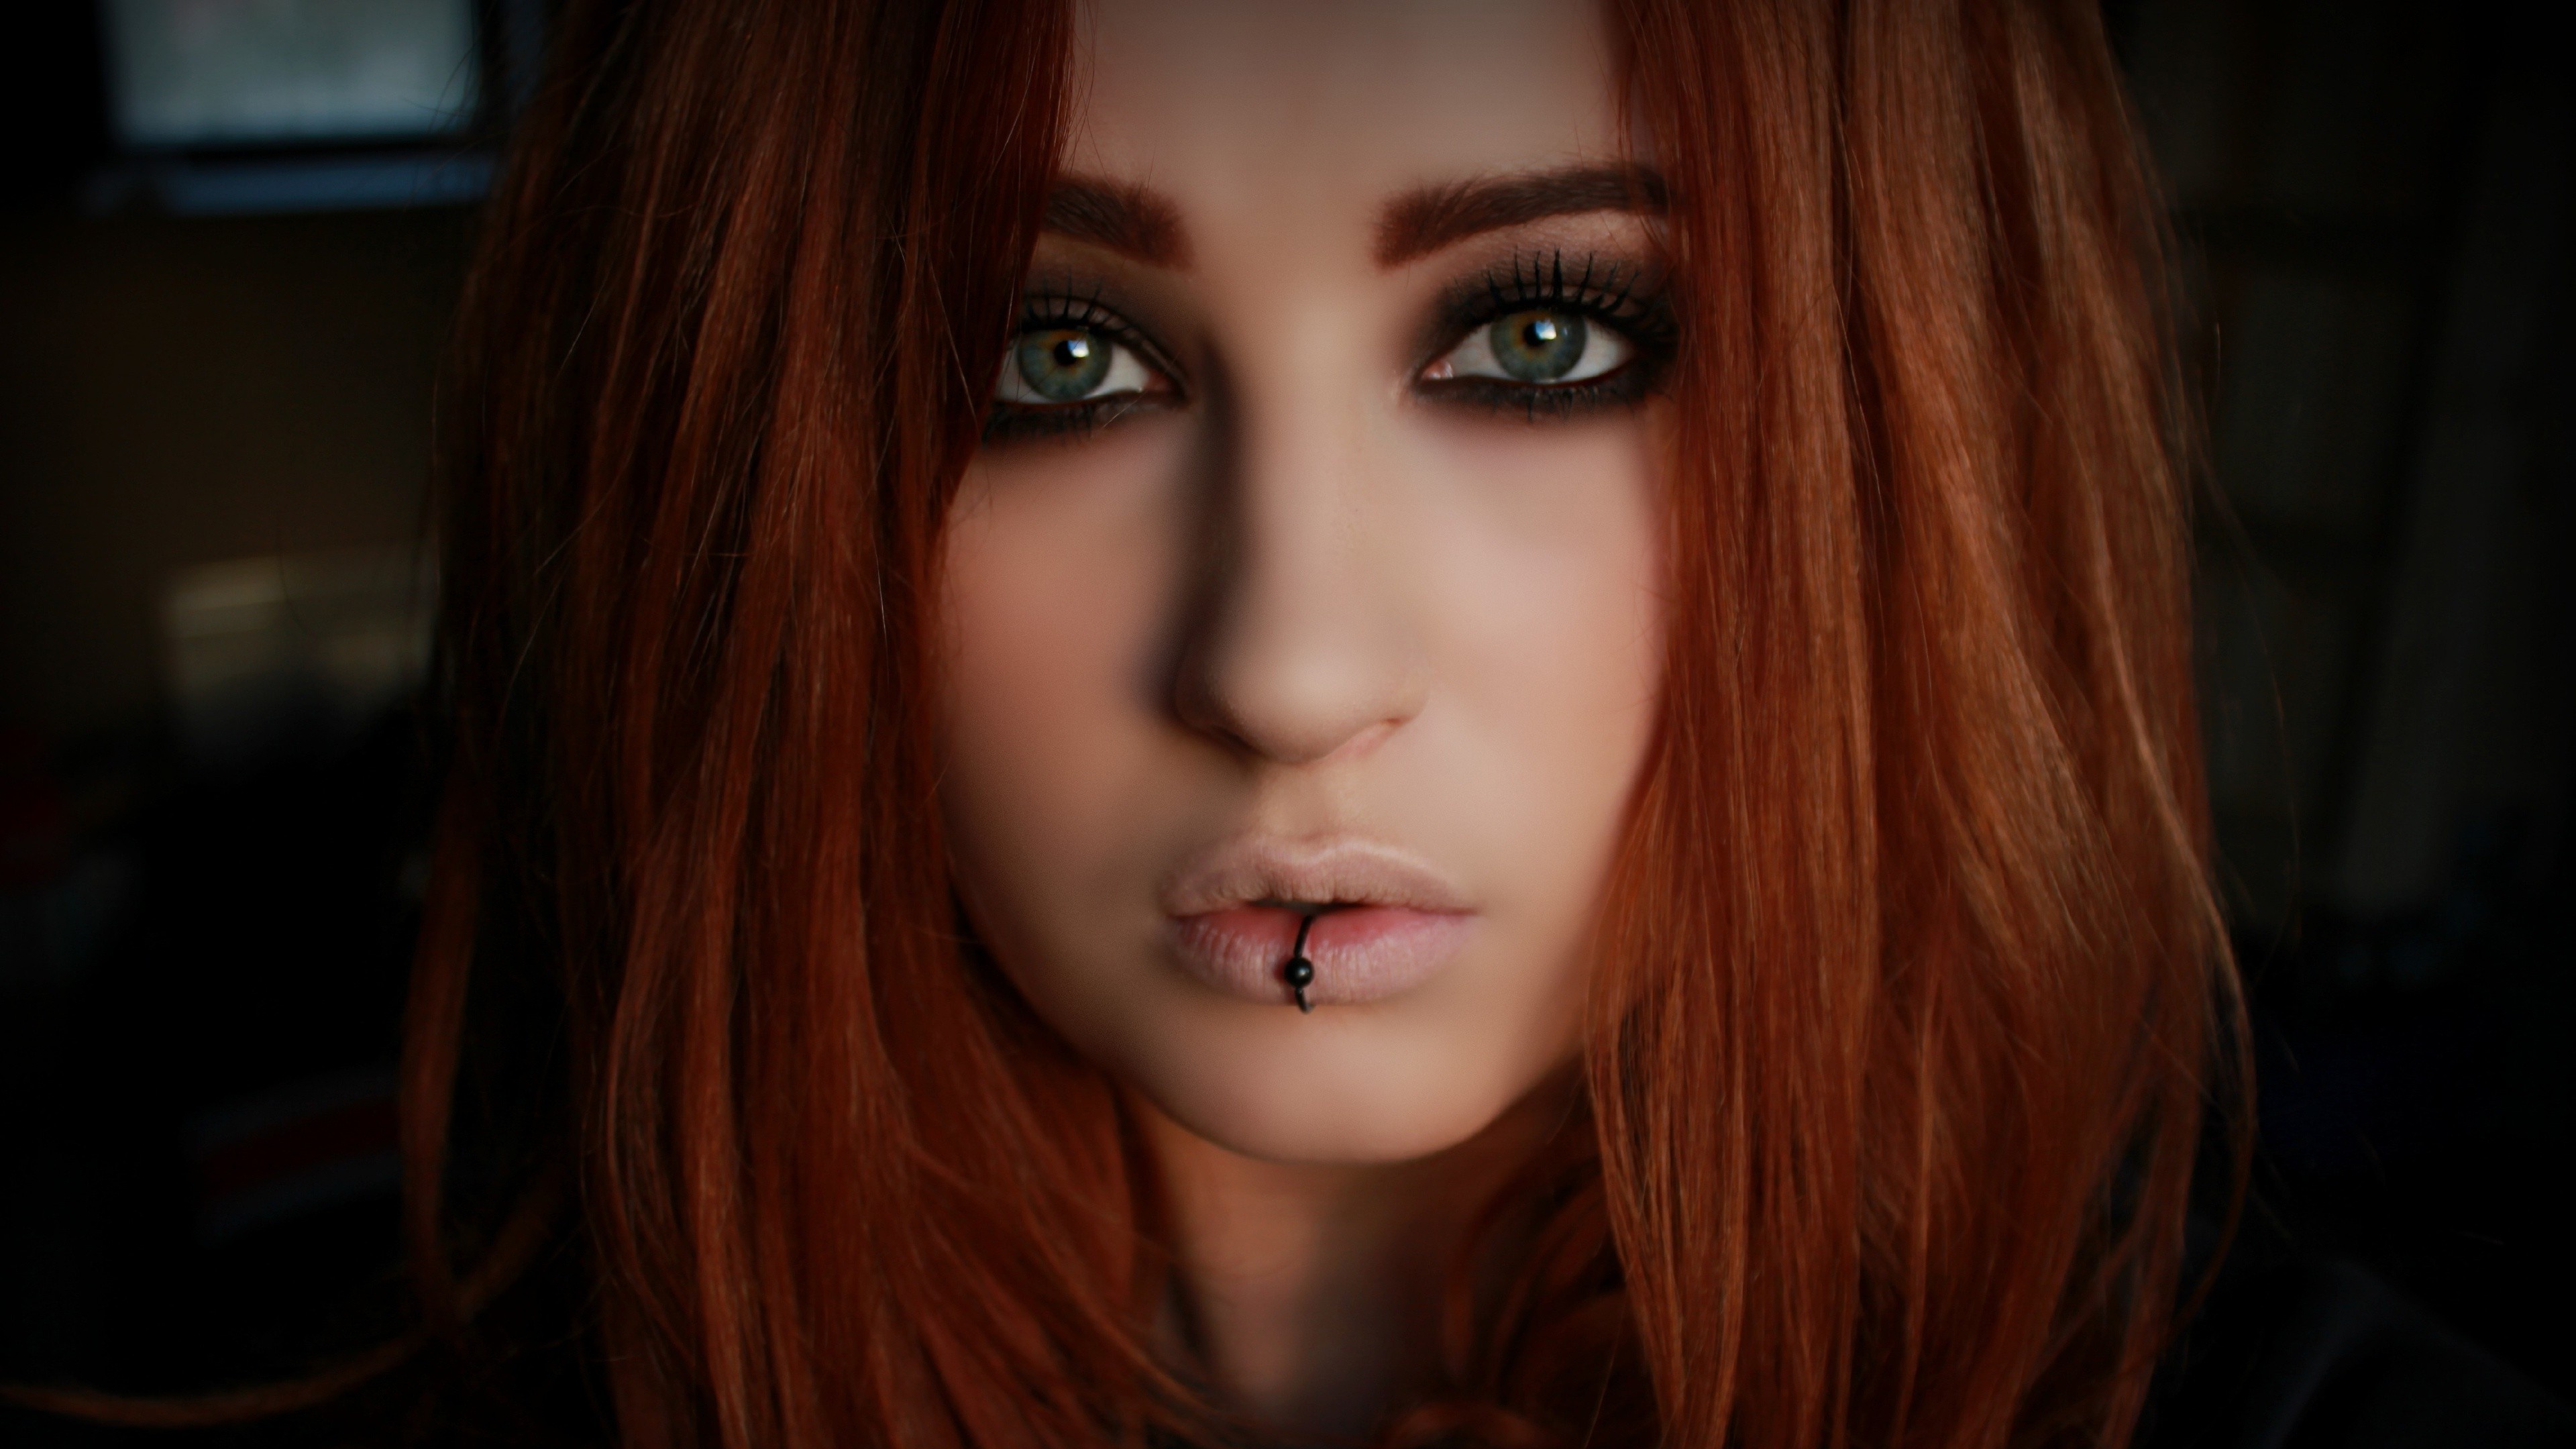 Redhead model, Piercing mouth, Women with piercings, Macabre lip ring, 3840x2160 4K Desktop